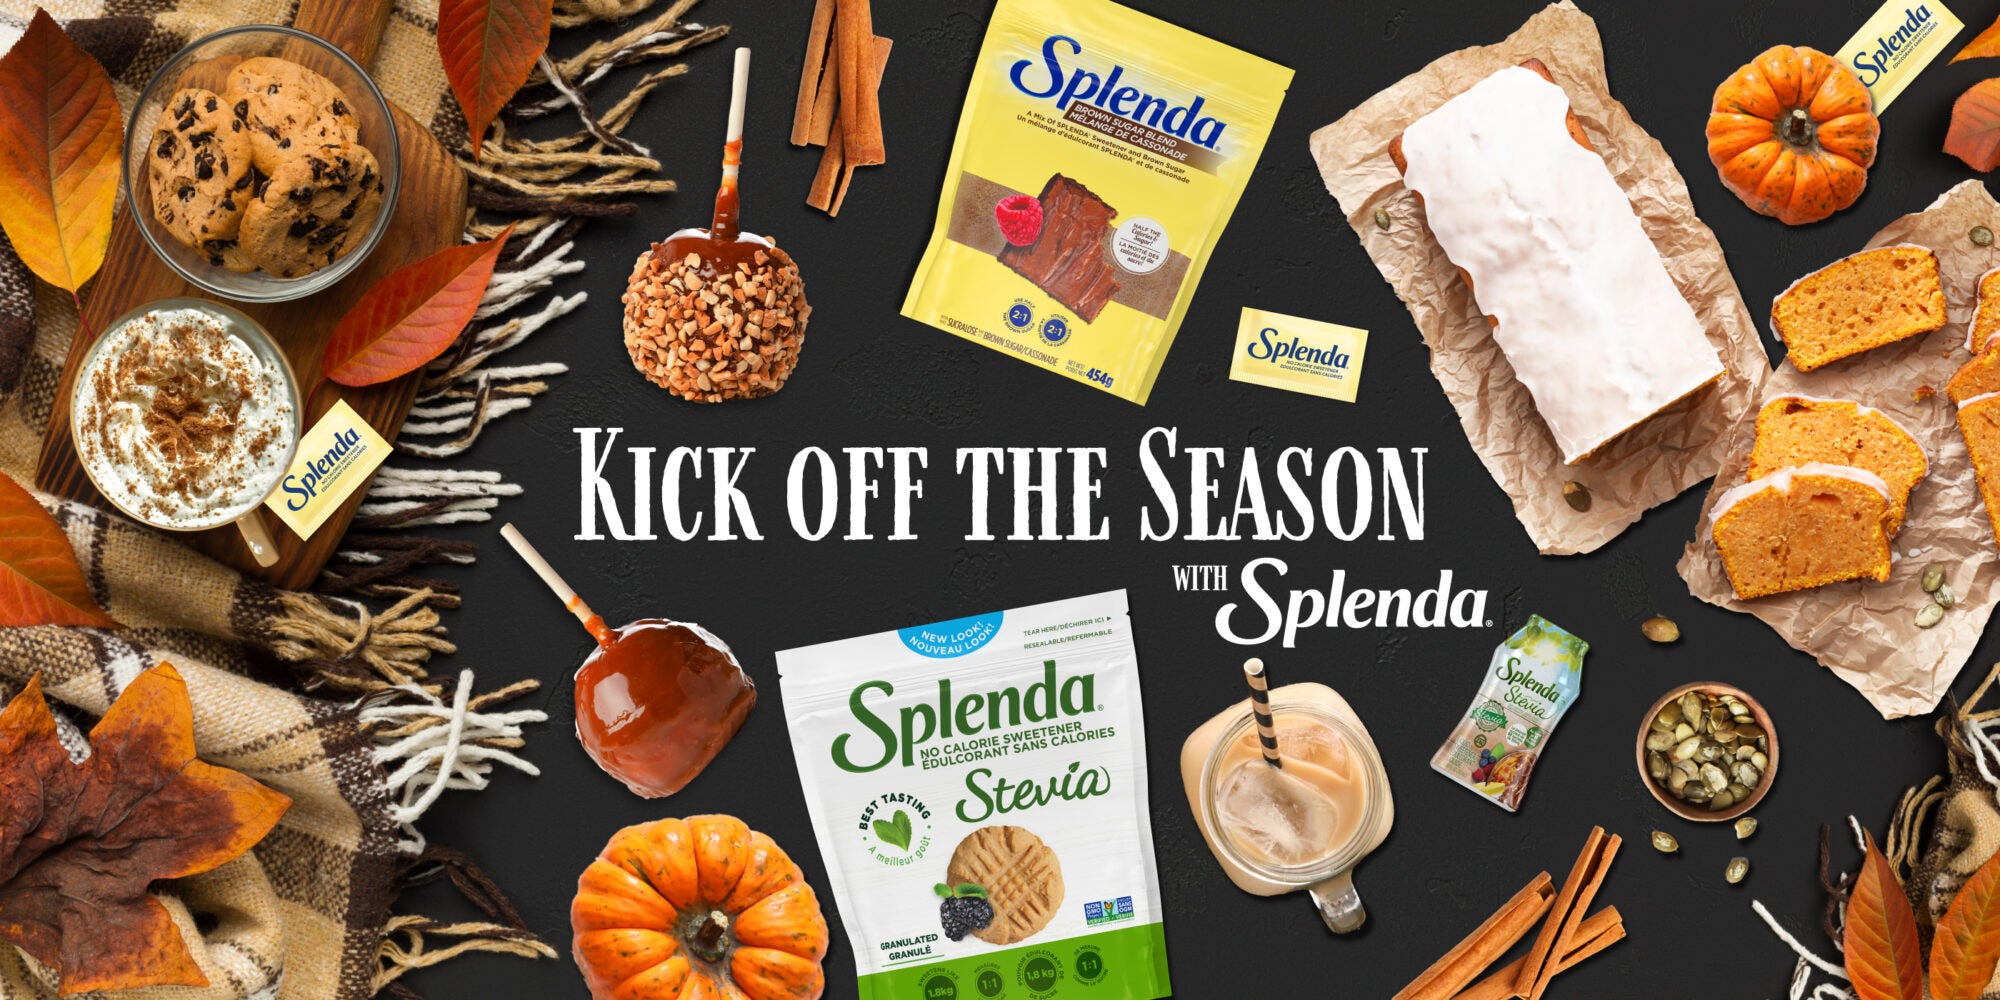 Kick off the season with Splenda